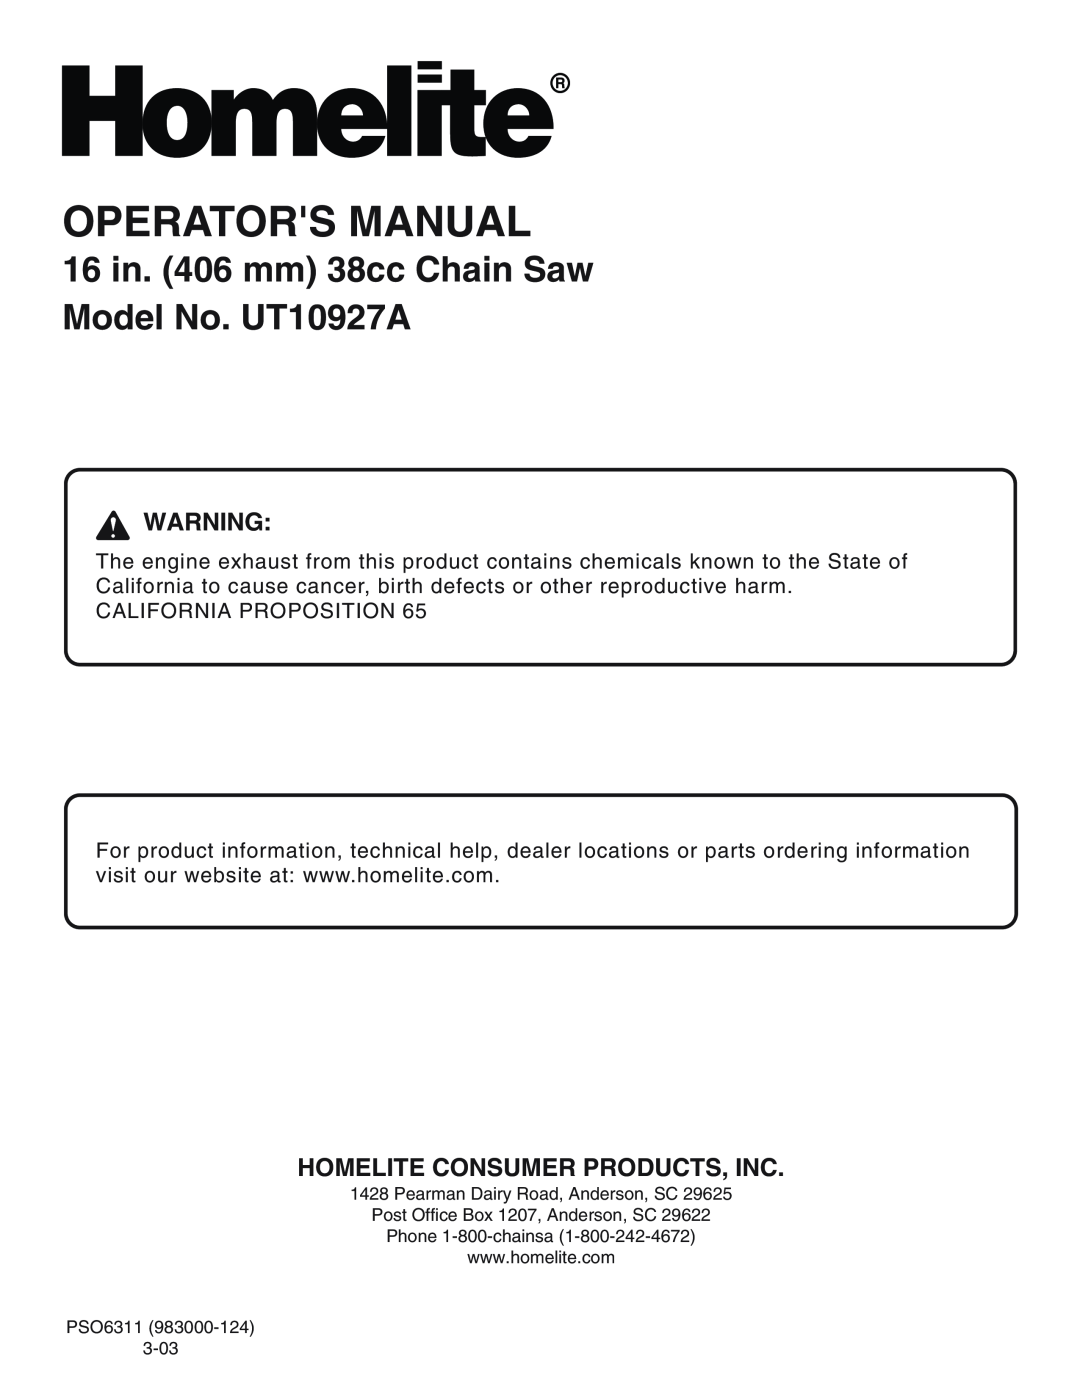 Homelite manual Homelite Consumer Products, Inc, Operators Manual, 16 in. 406 mm 38cc Chain Saw Model No. UT10927A 